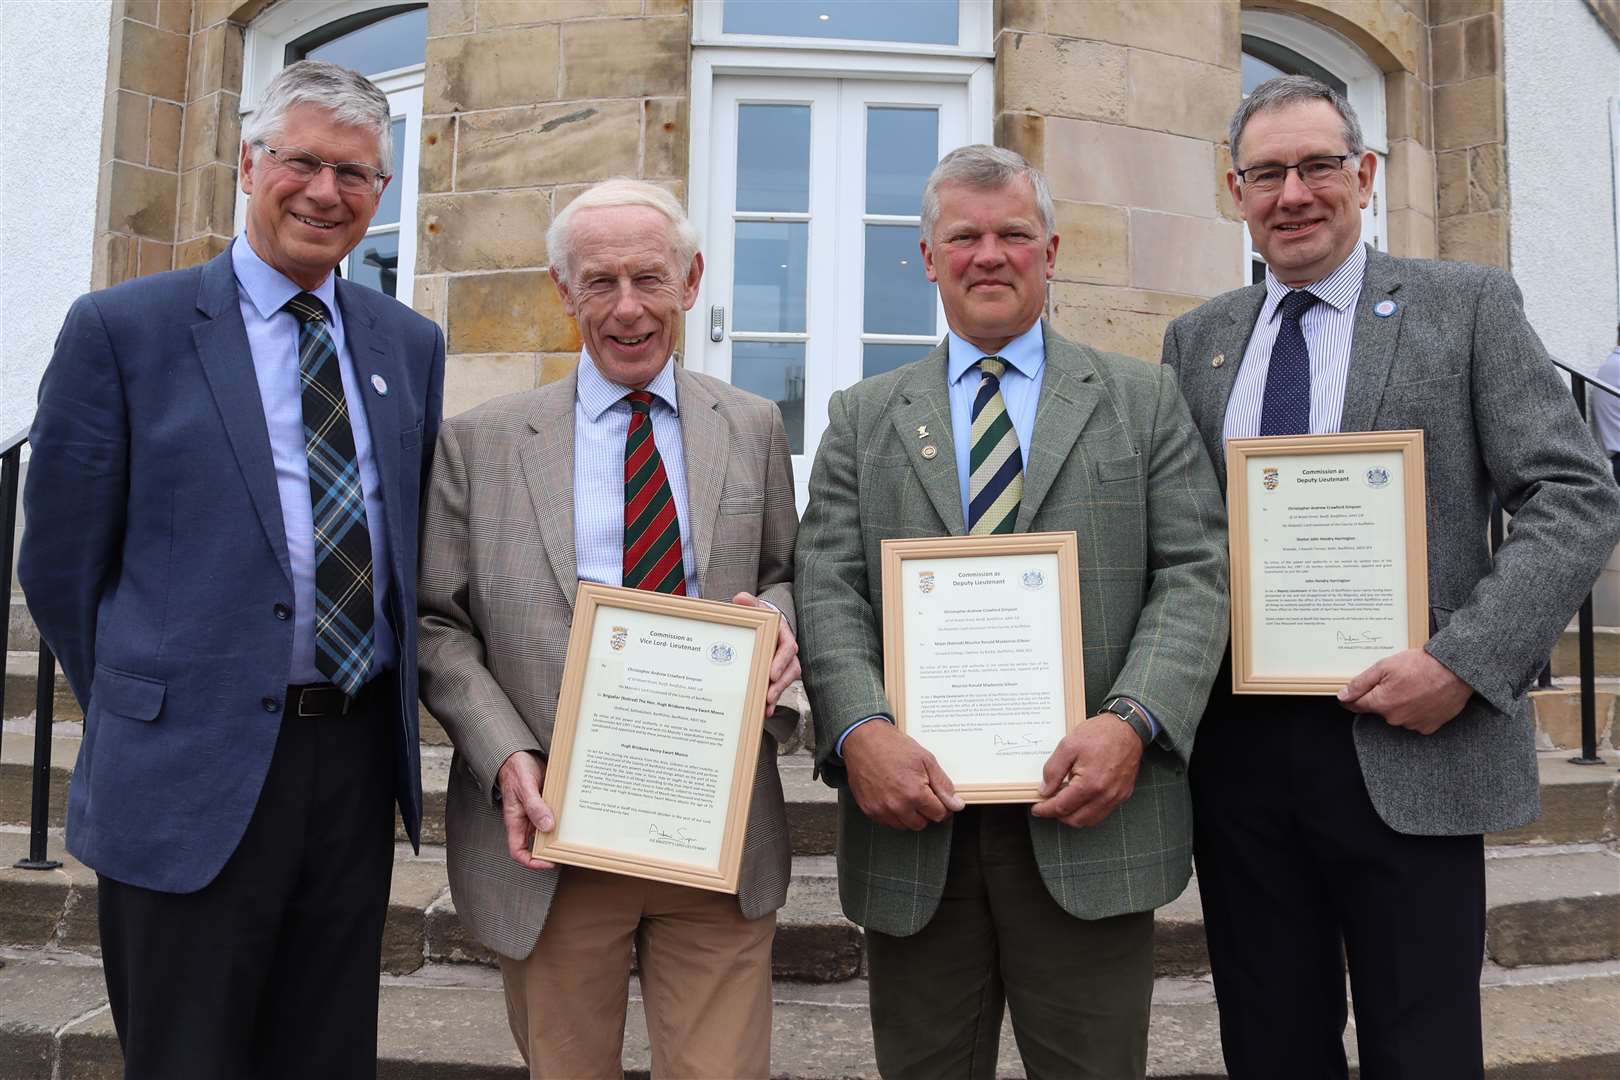 From left to right: Lord lieutenant of Banffshire Andrew Simpson, Hugh Monro, Maurice Gibson, John Harrington